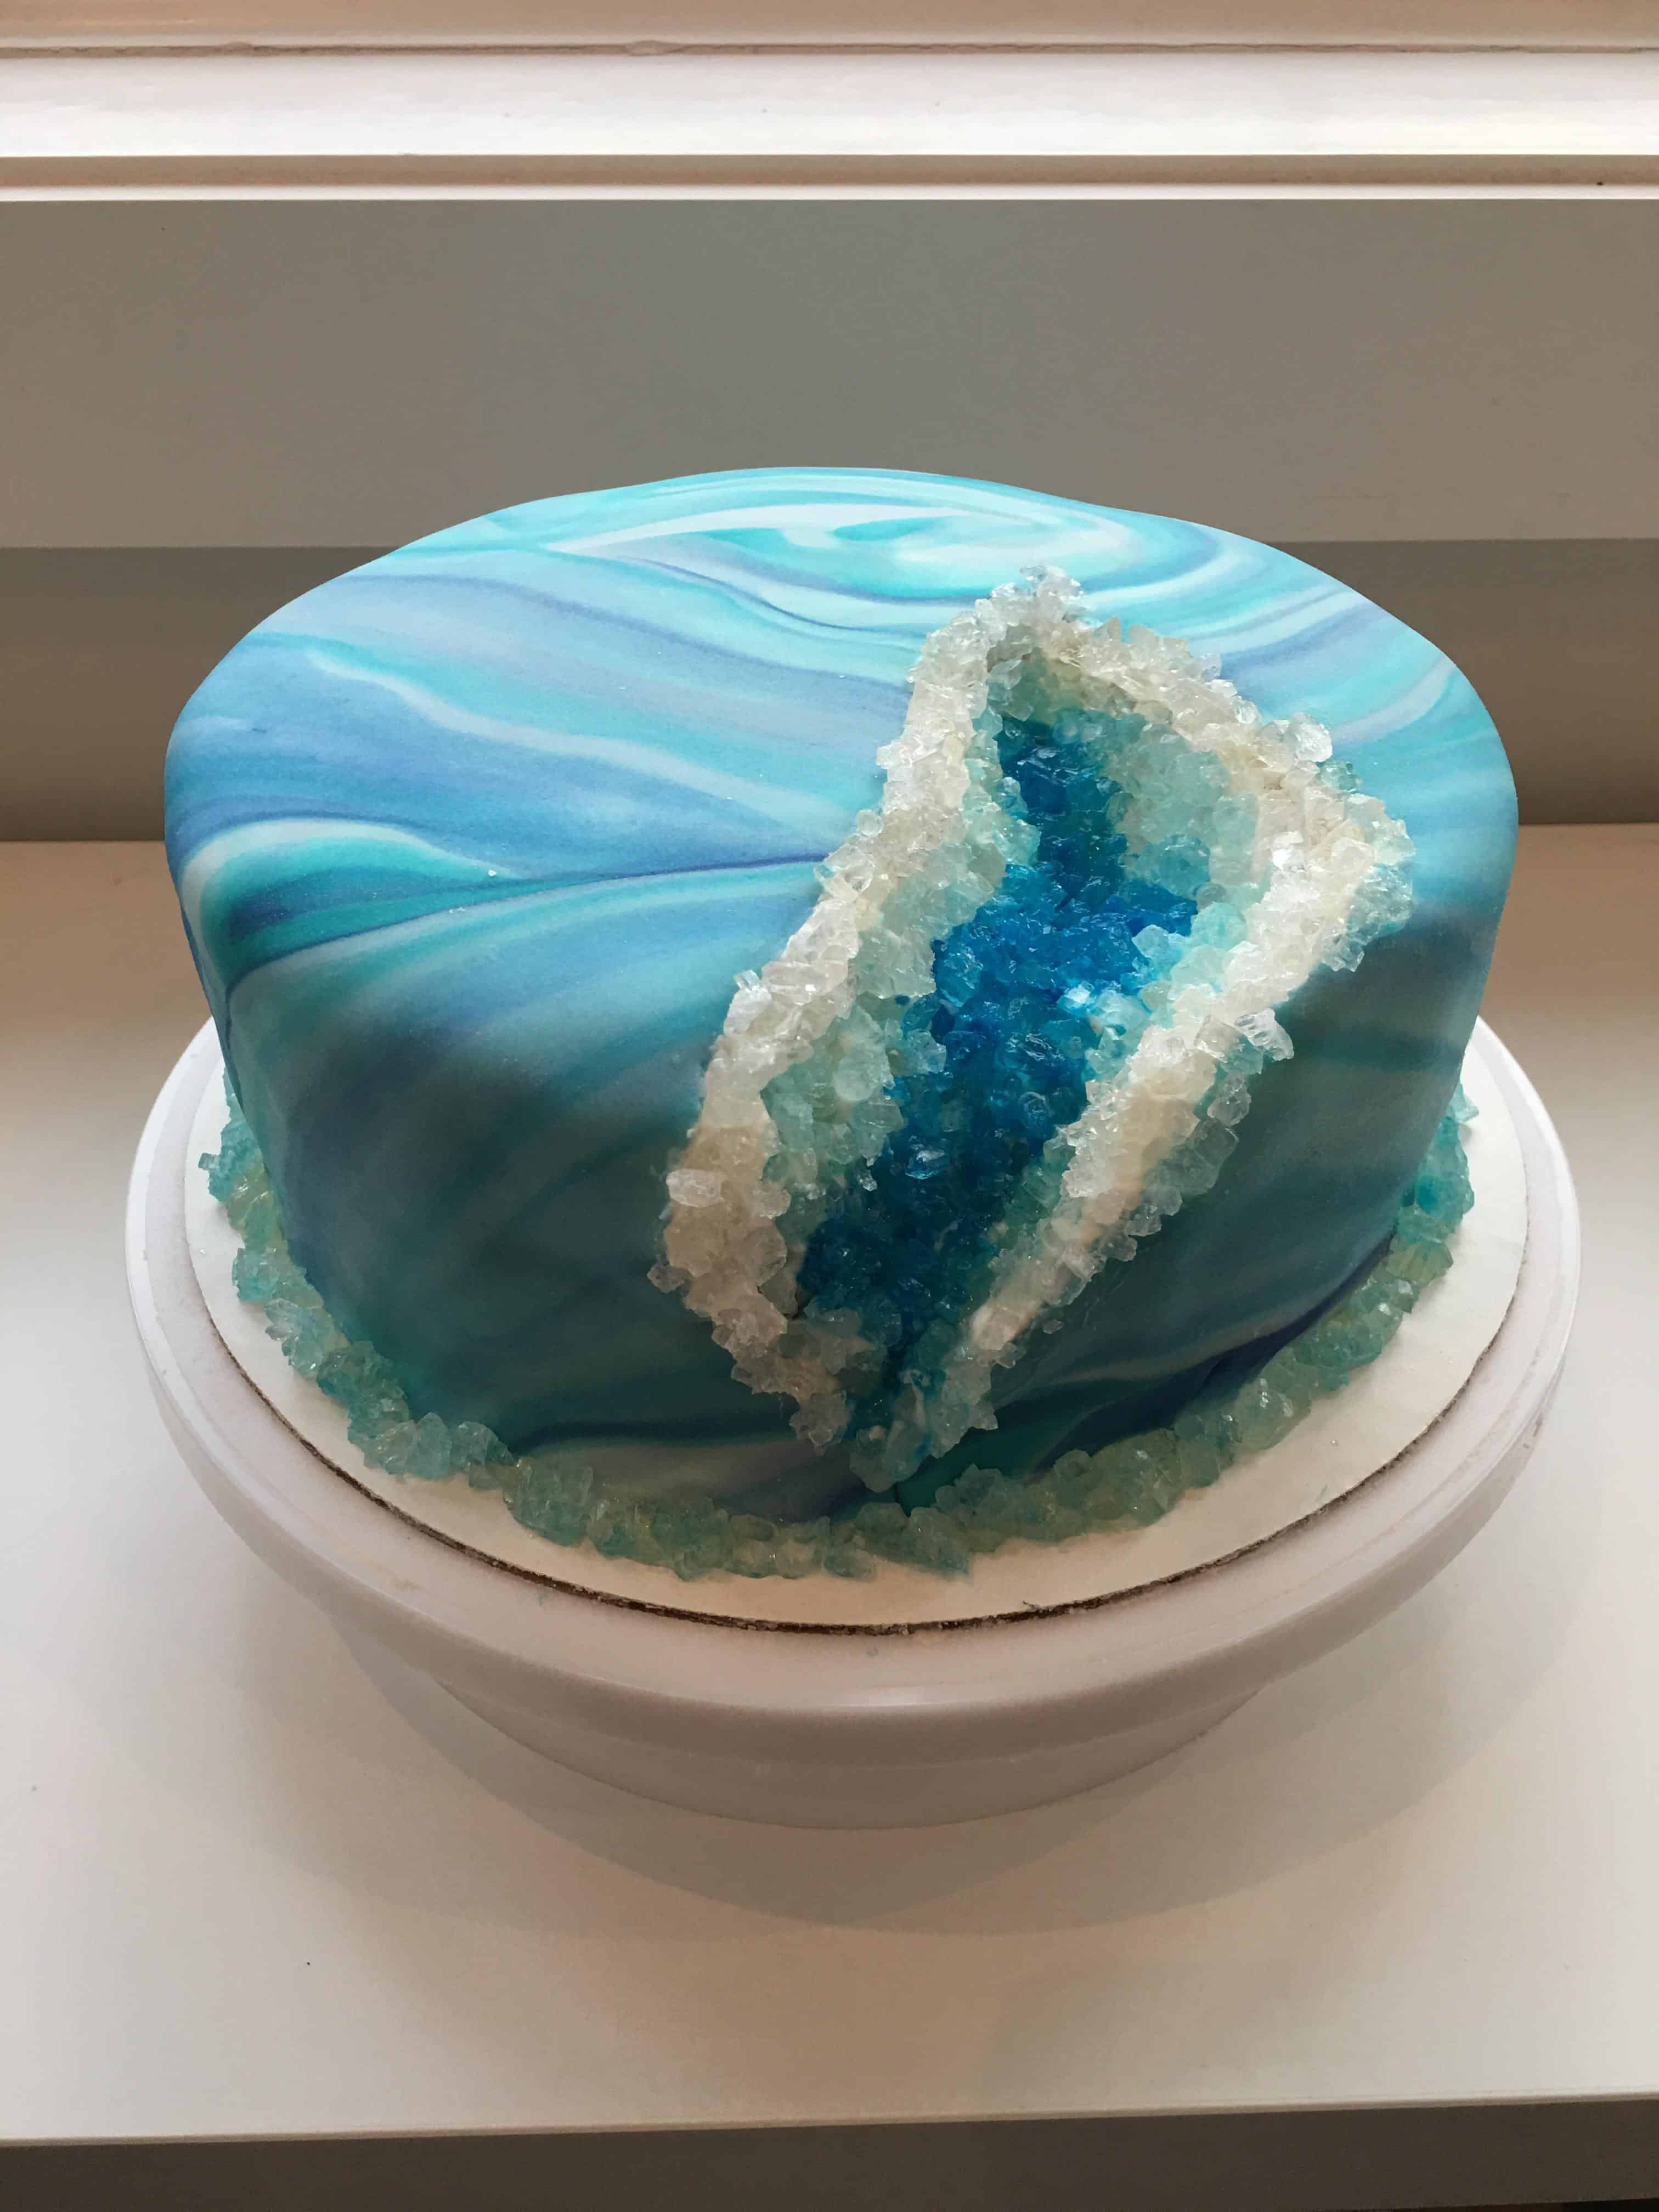 Stunning blues geode cake